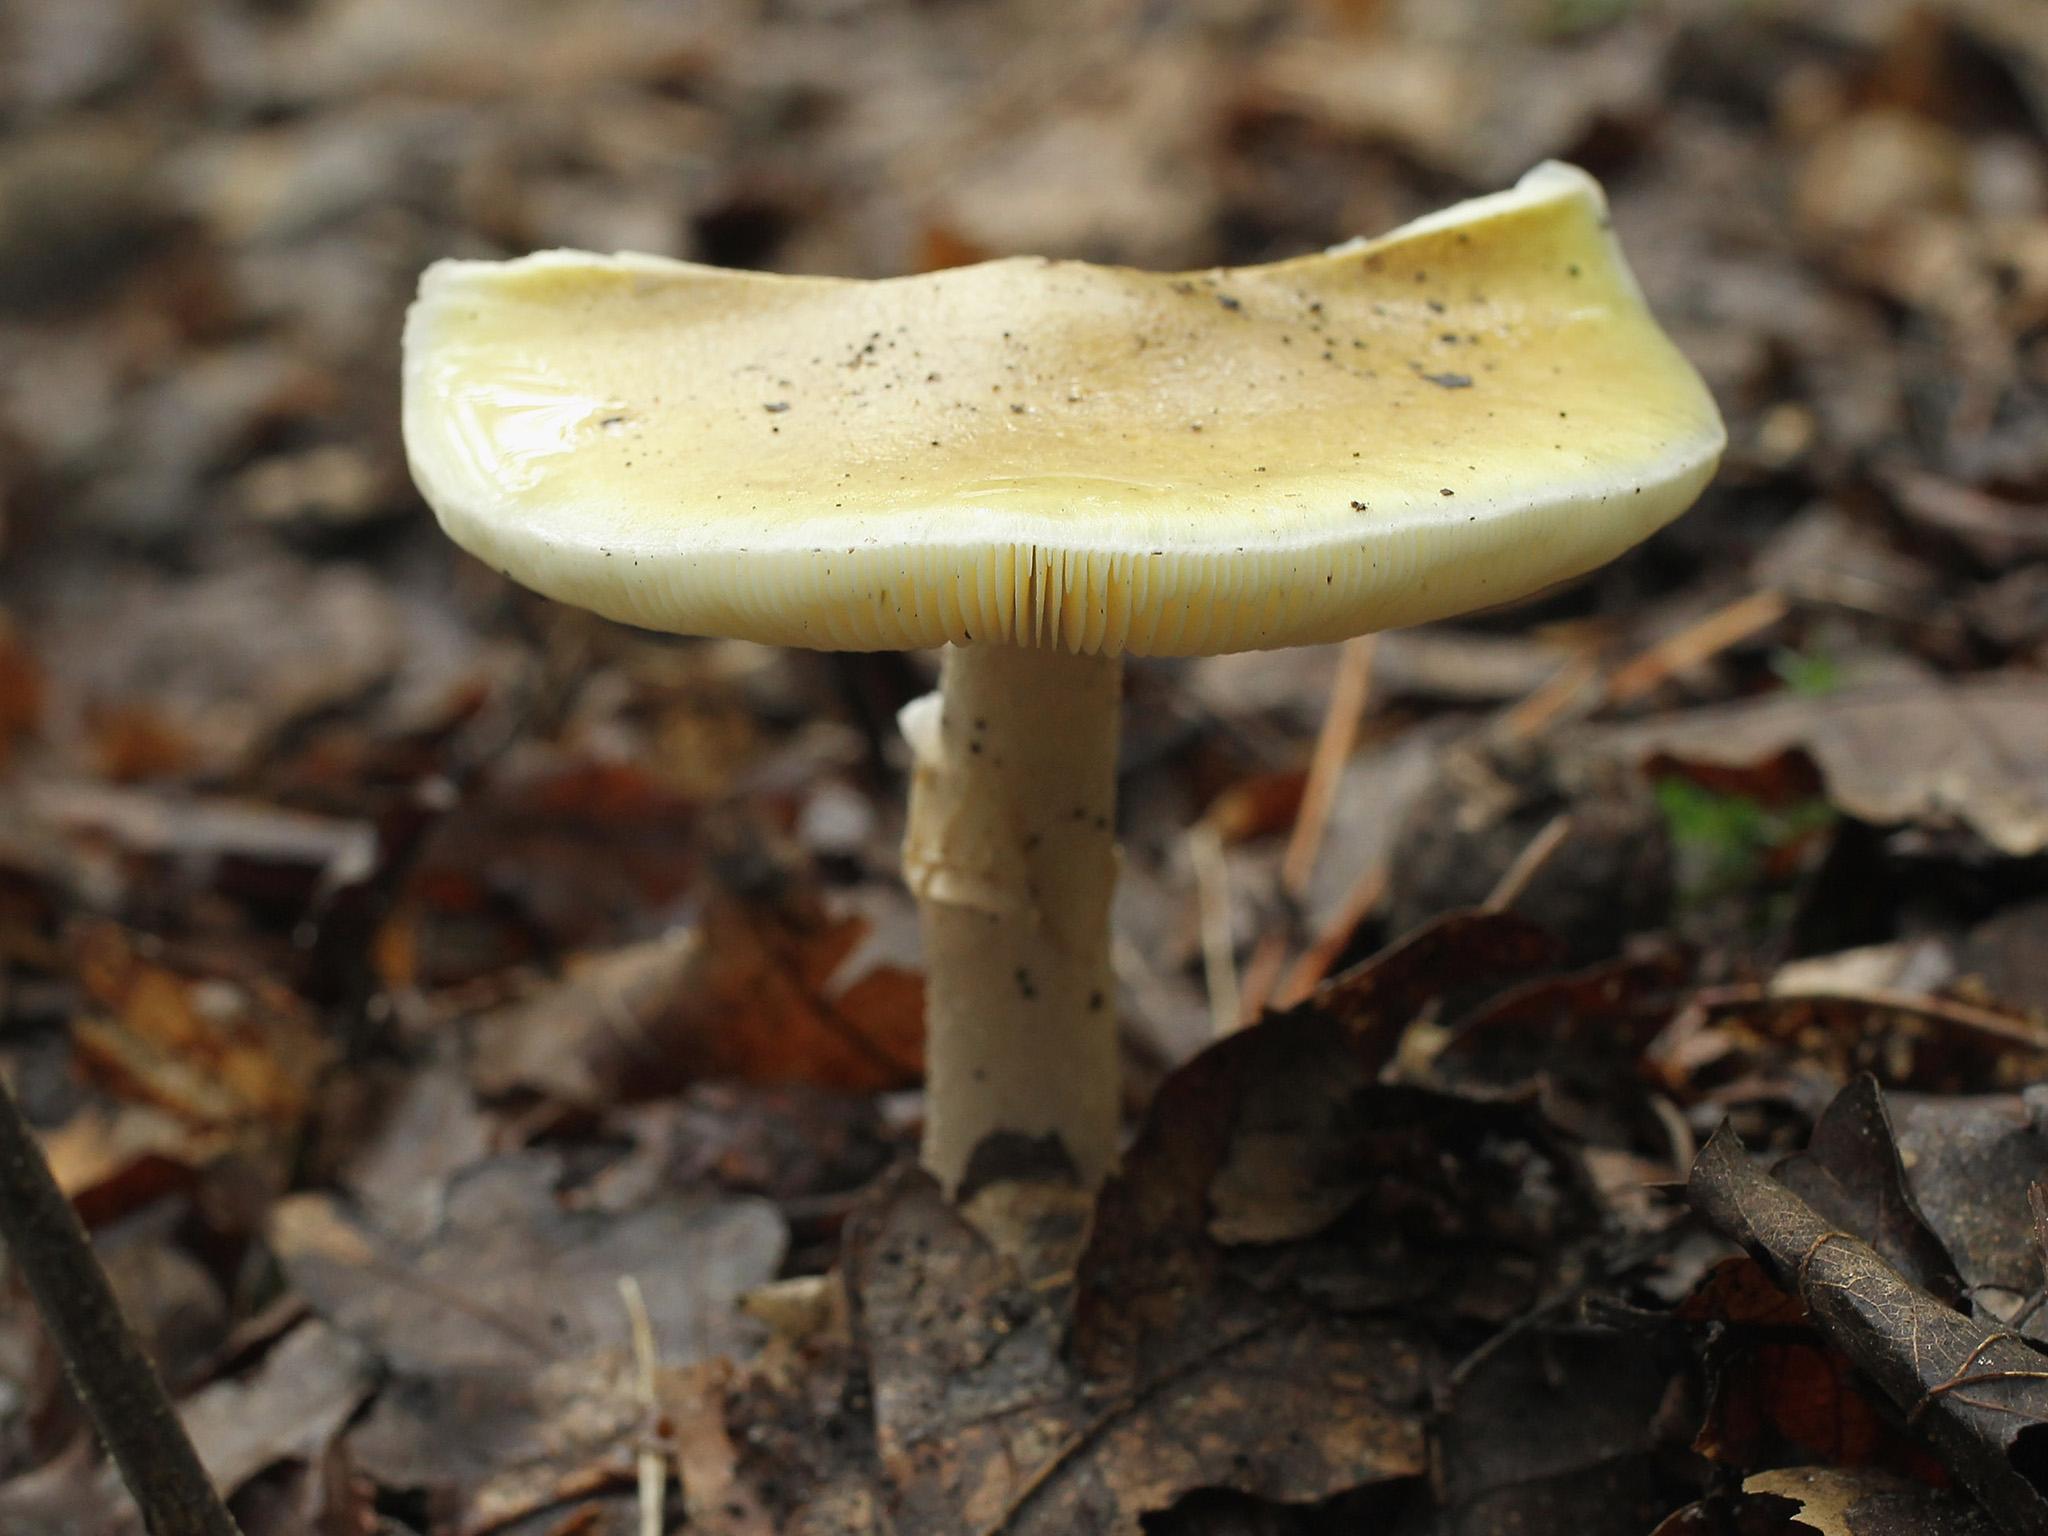 The Death Cap mushroom kills 90 per cent of people who eat it